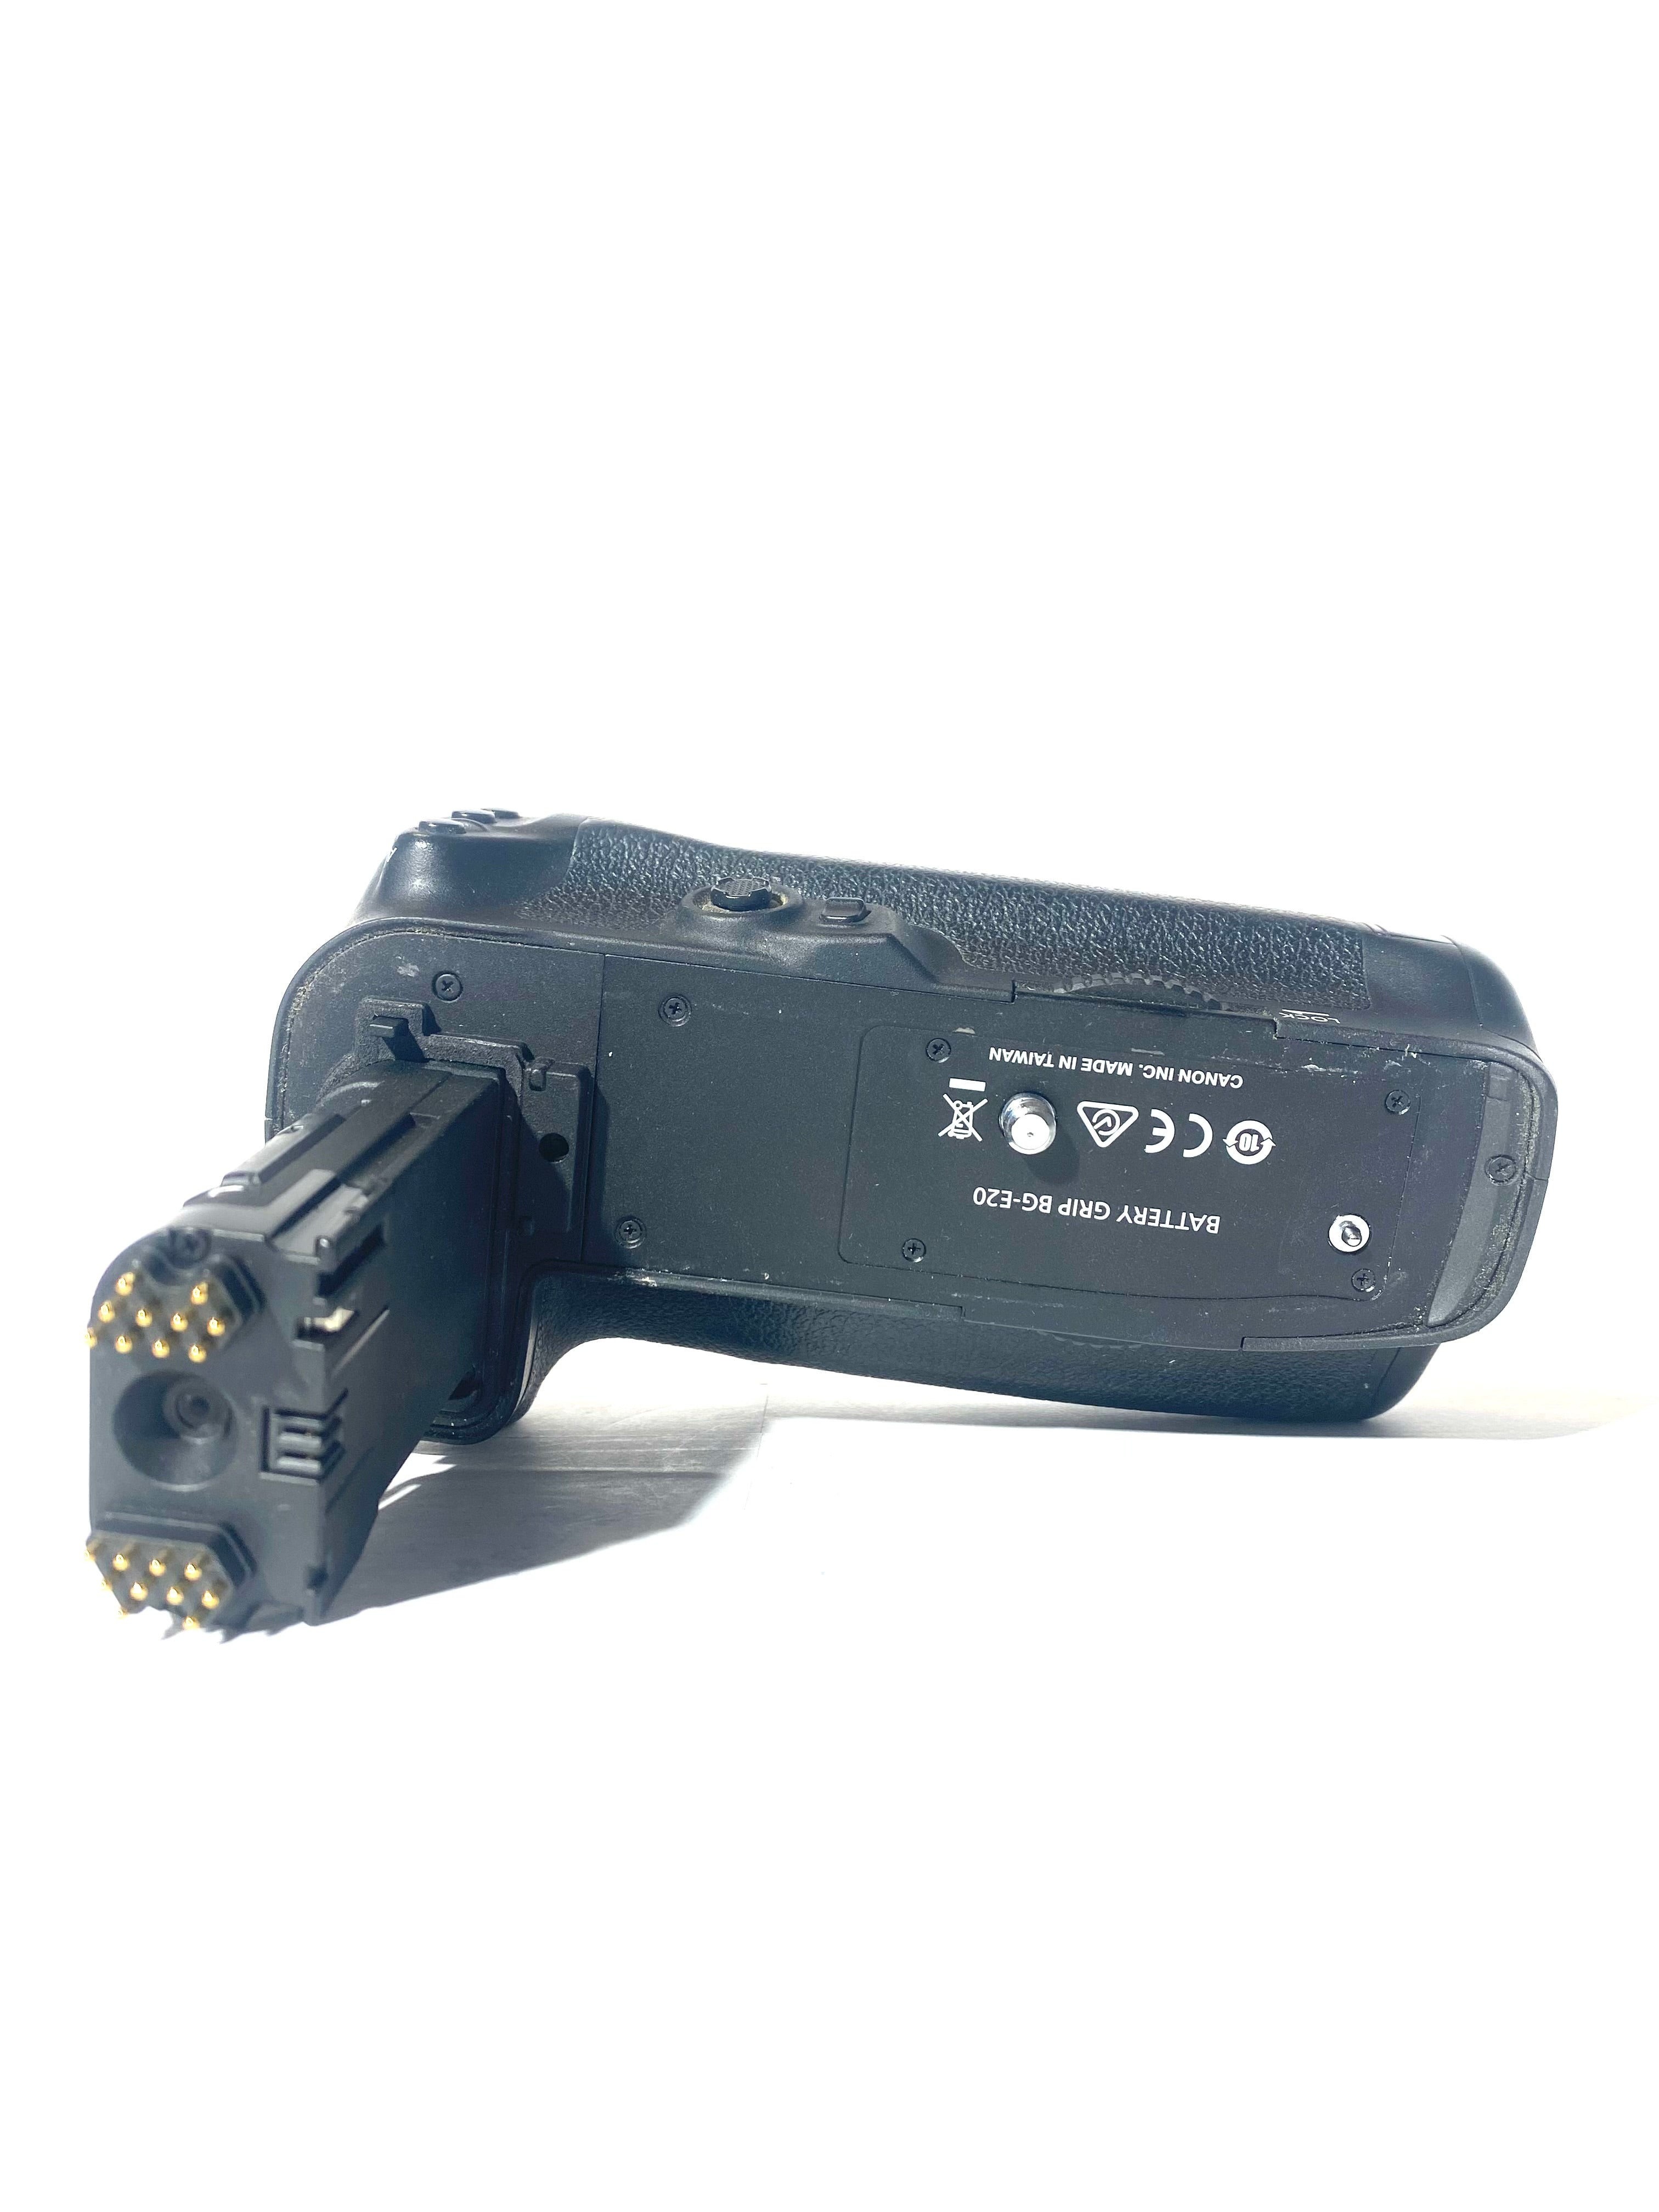 Battery Grip BG-E20 usato per Canon 5d mark IV